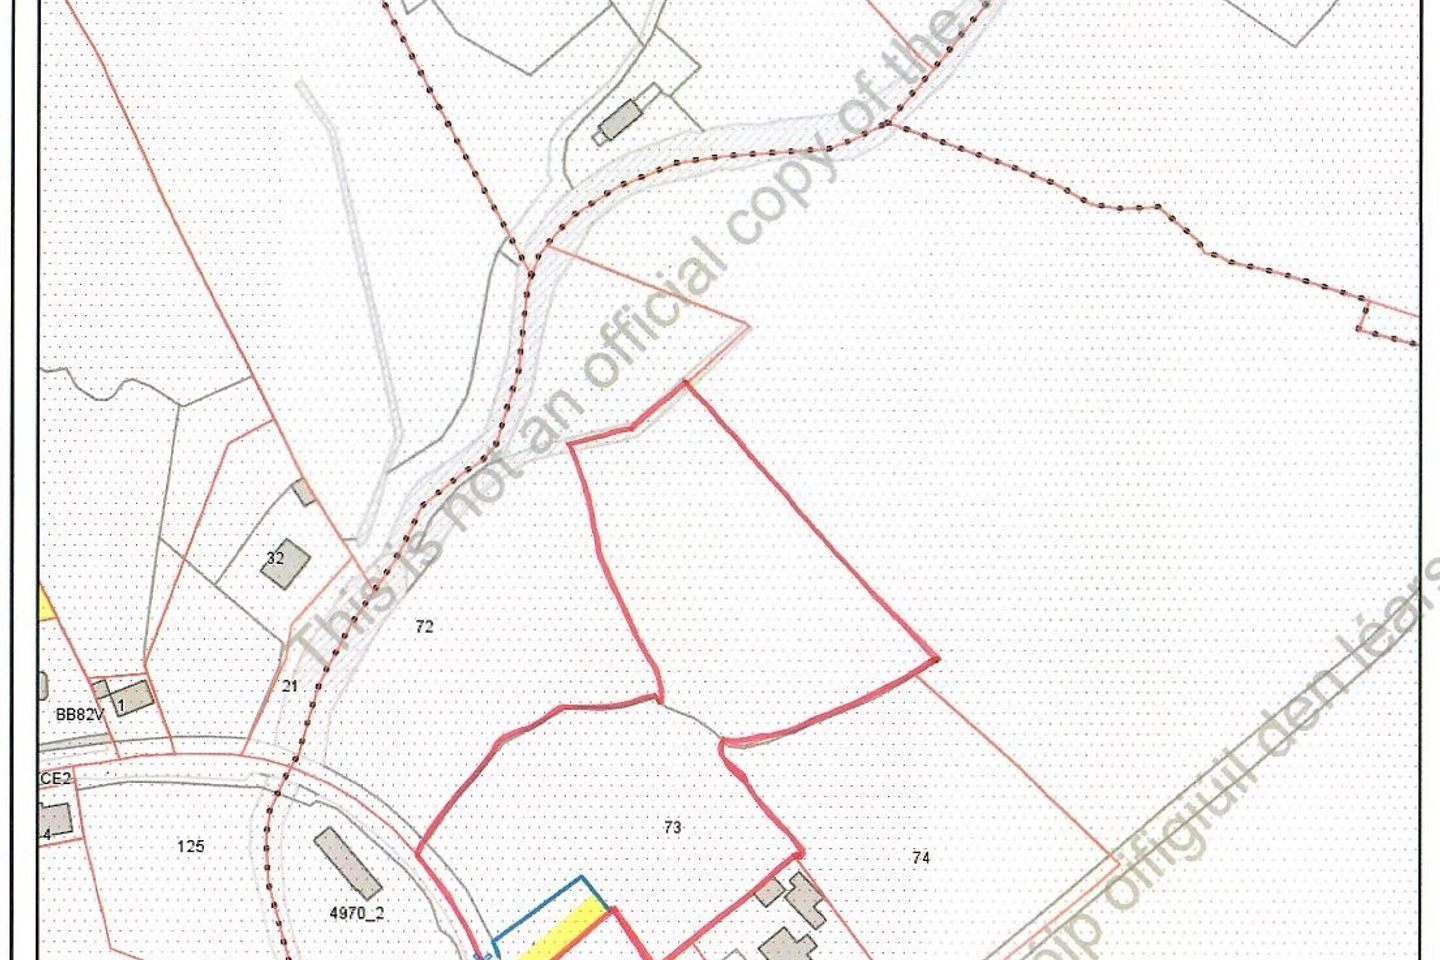 Ref 1089 - Development Lands, Ballycarnahan, Caherdaniel, Co. Kerry